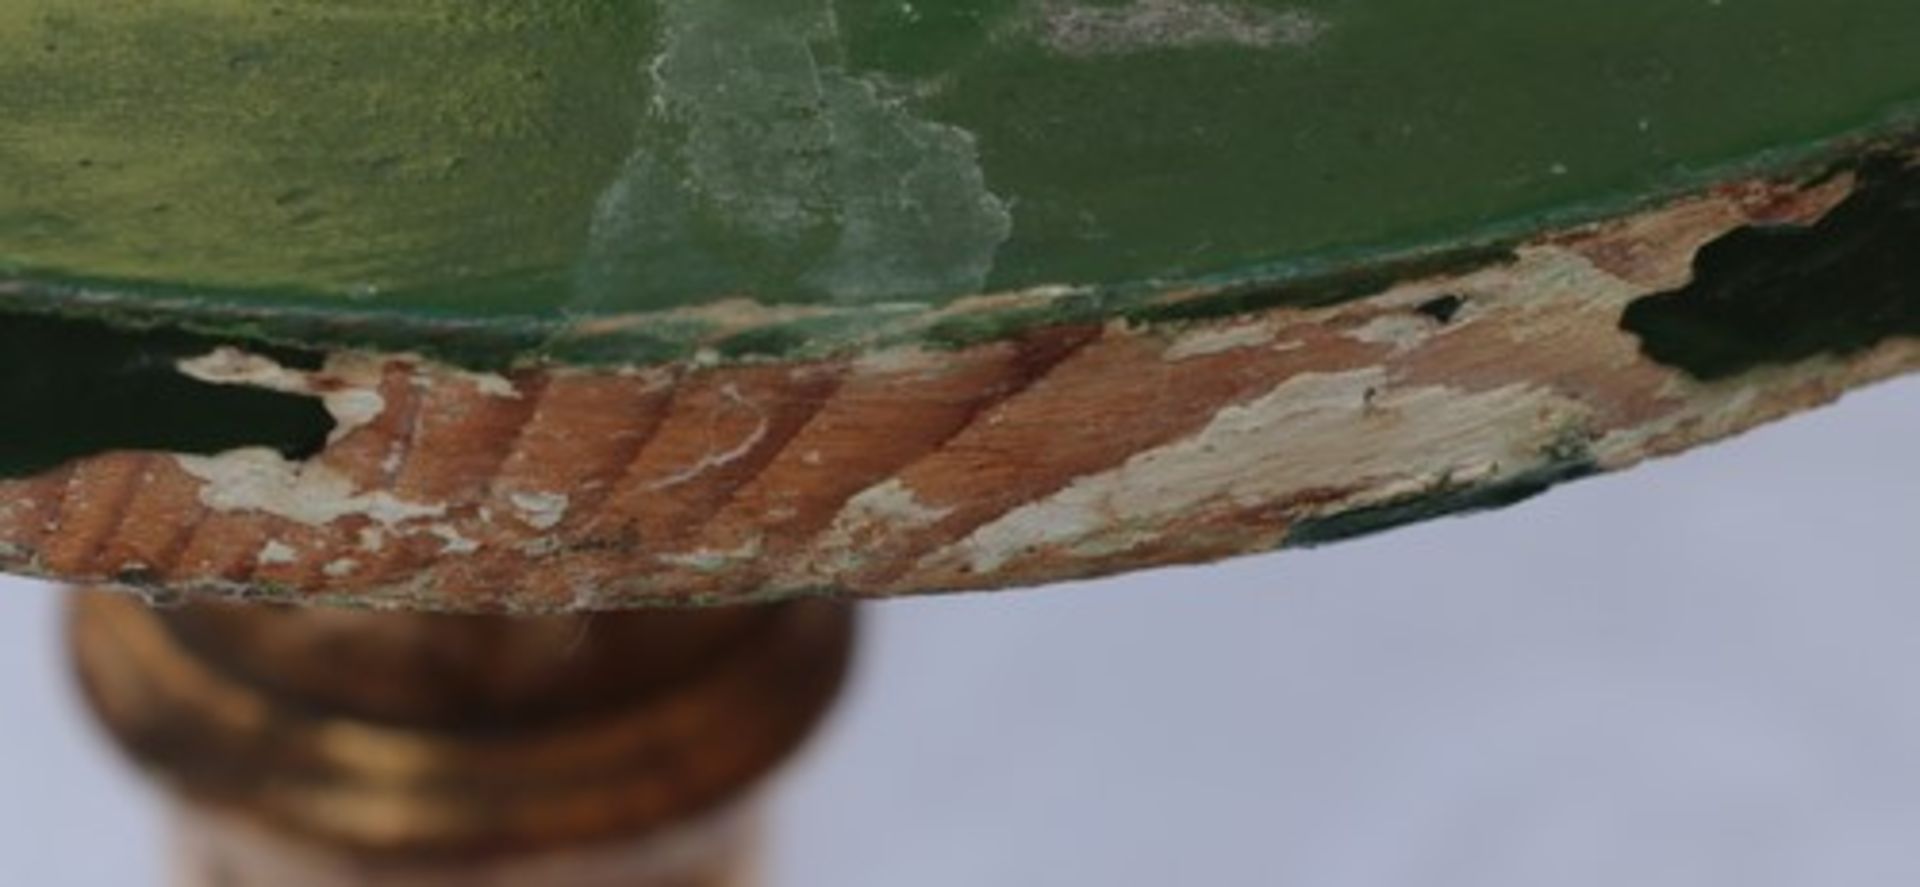 Blumensäule18./19. Jh., Holz, geschnitzt, vergoldet, grün bemalt, oktogonaler, abgetreppter Fuß, - Bild 2 aus 6